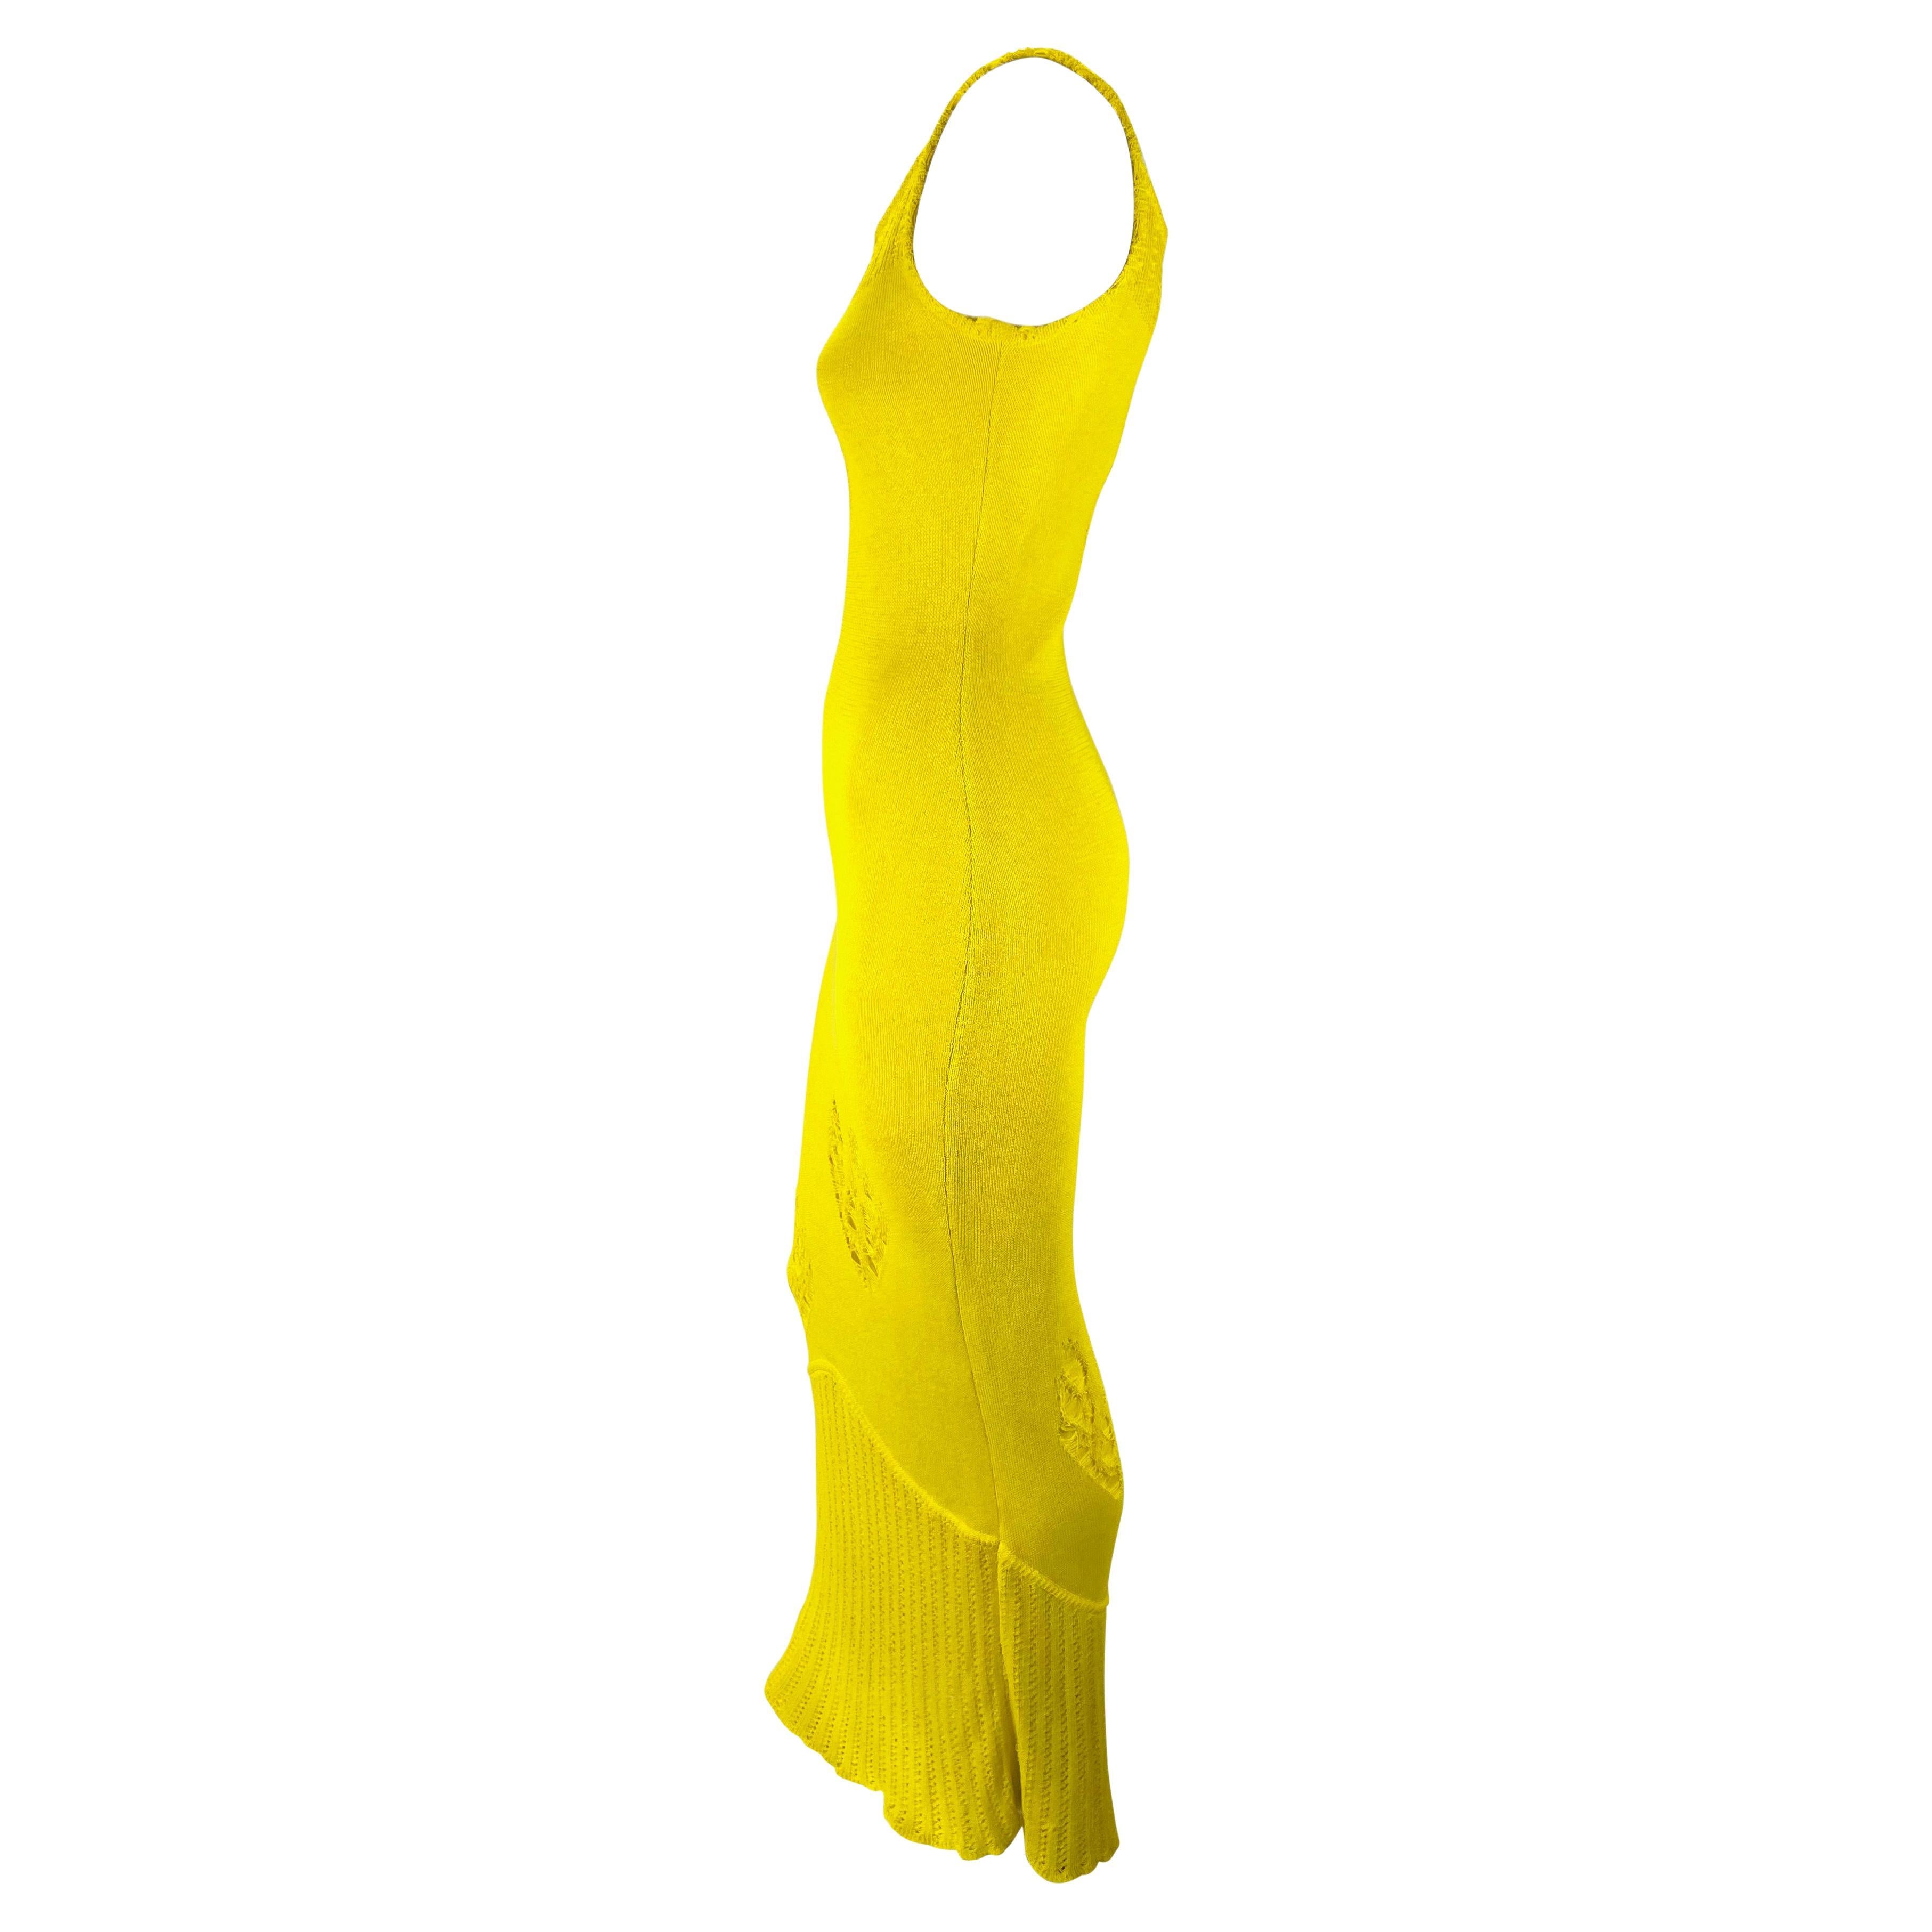 Jaune John Galliano - Robe en maille extensible jaune canari en forme de cœur vieilli, P/E 2000 en vente